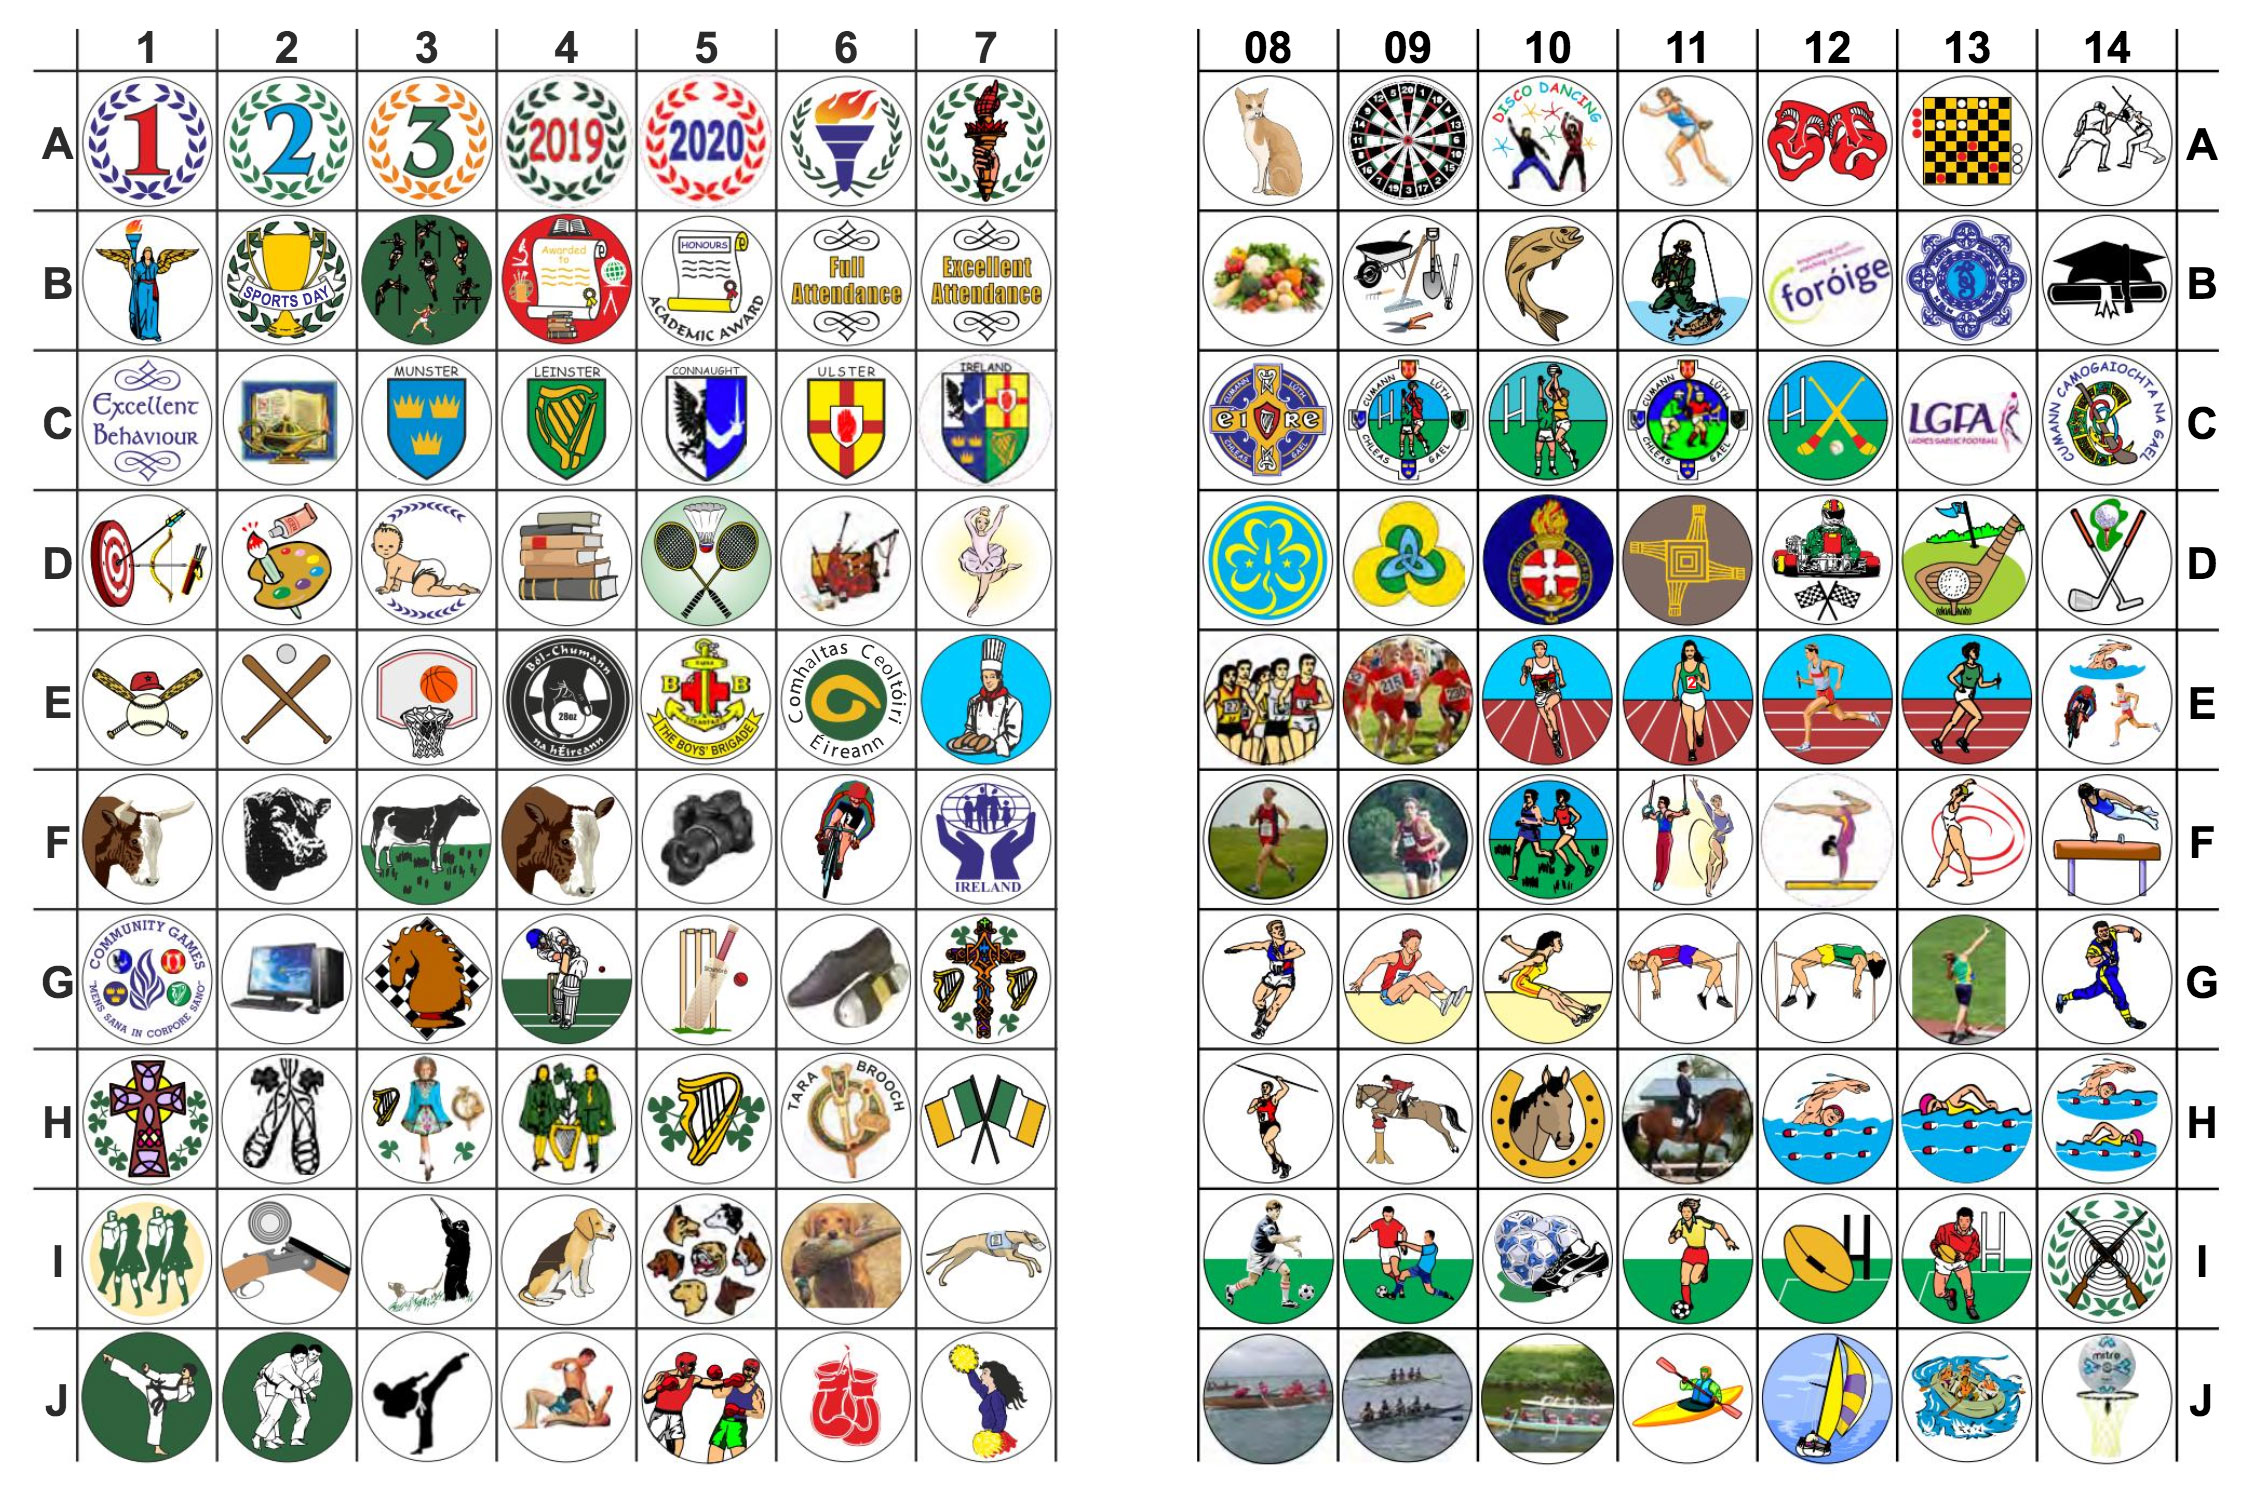 trophies-ireland-custom-medal-sticker-image